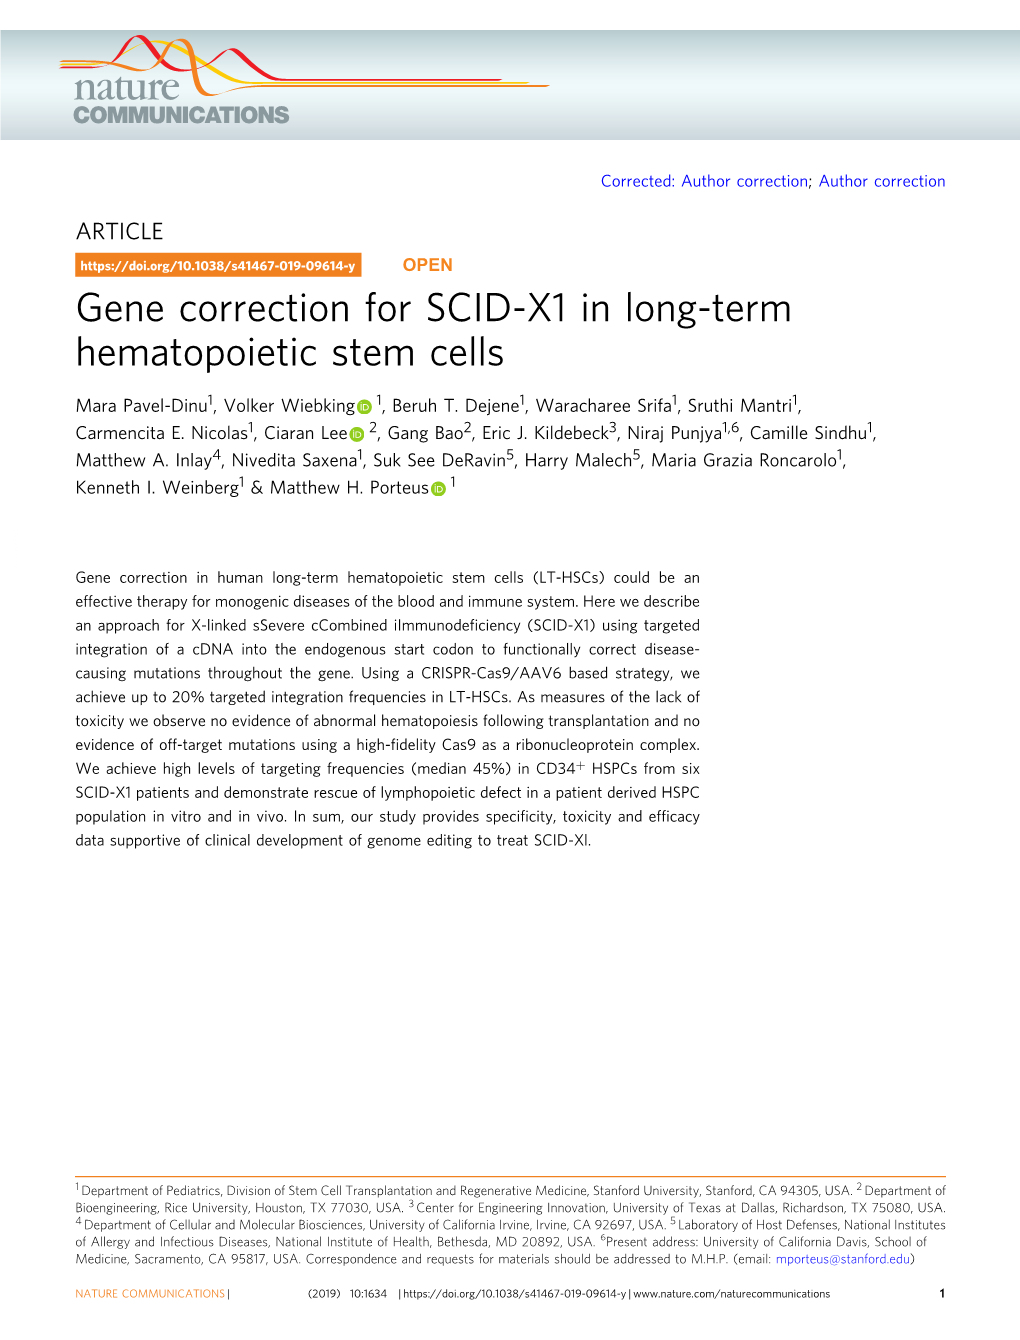 Gene Correction for SCID-X1 in Long-Term Hematopoietic Stem Cells